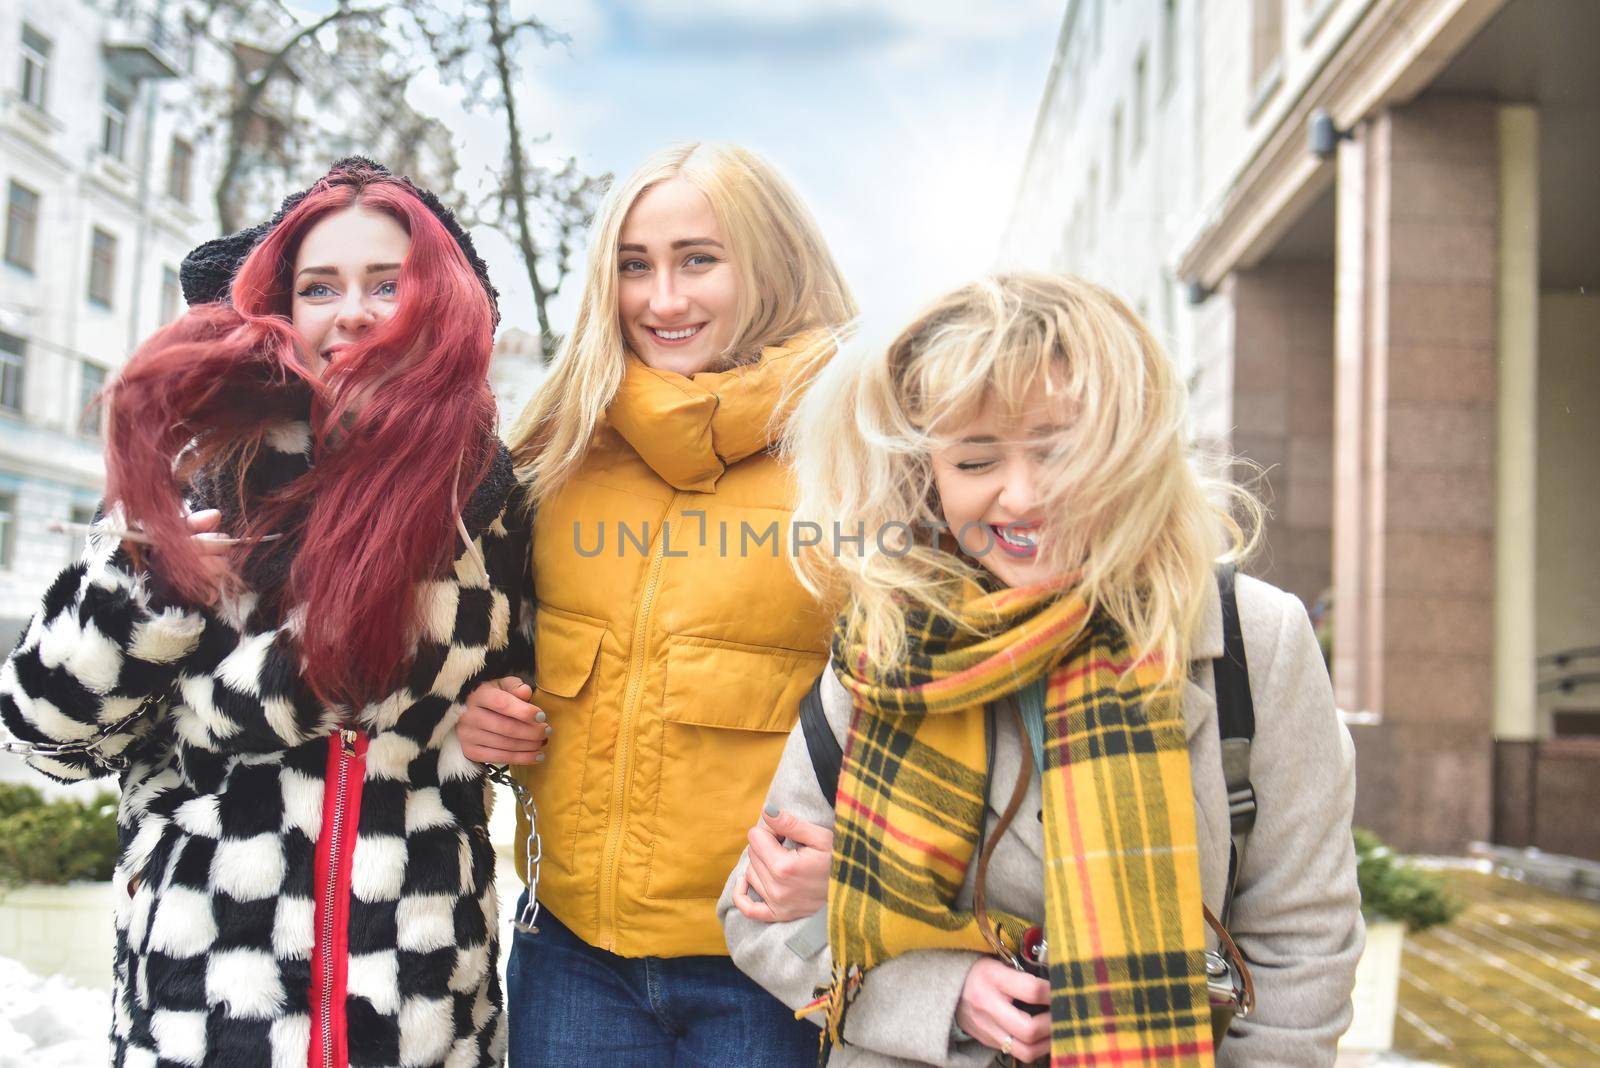 tourism concept - three beautiful girls tourists, having fun Running through the bright city by Nickstock